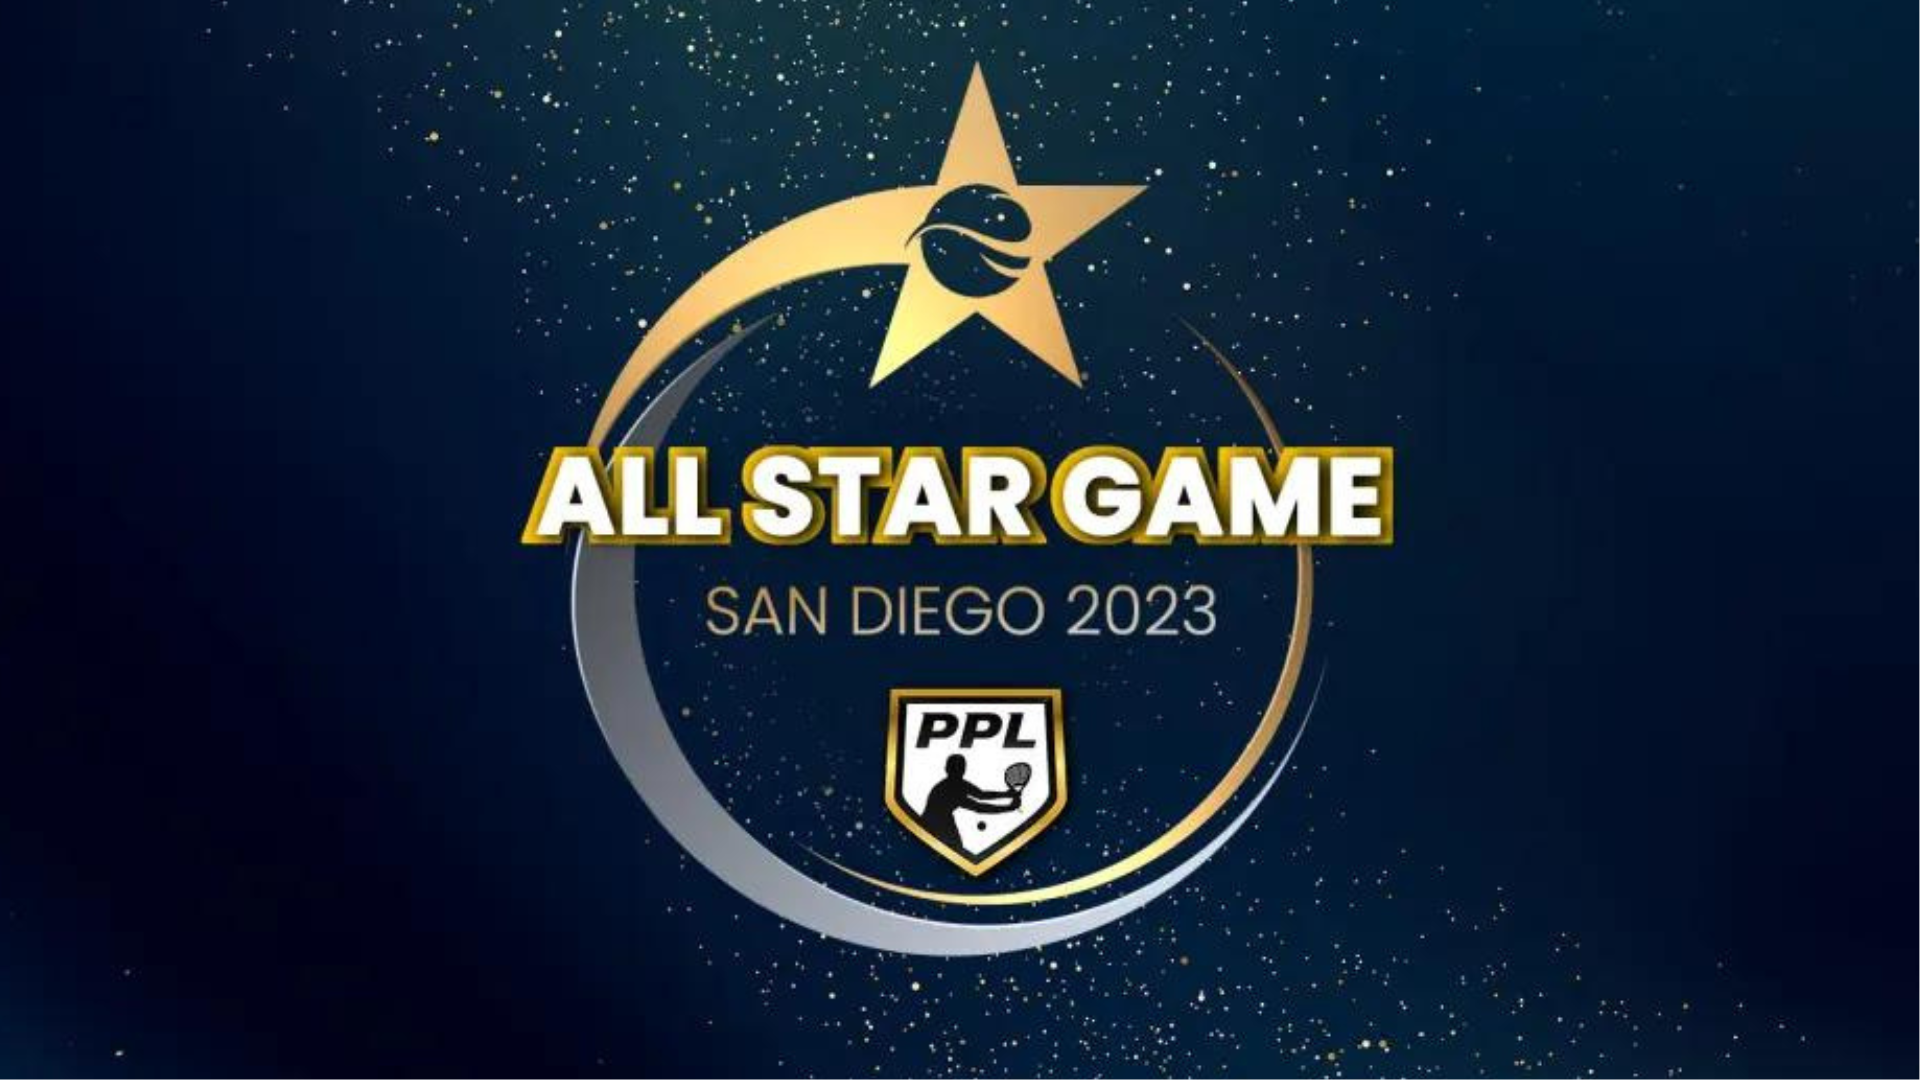 All Star Game PPL 2023 EUA San Diego